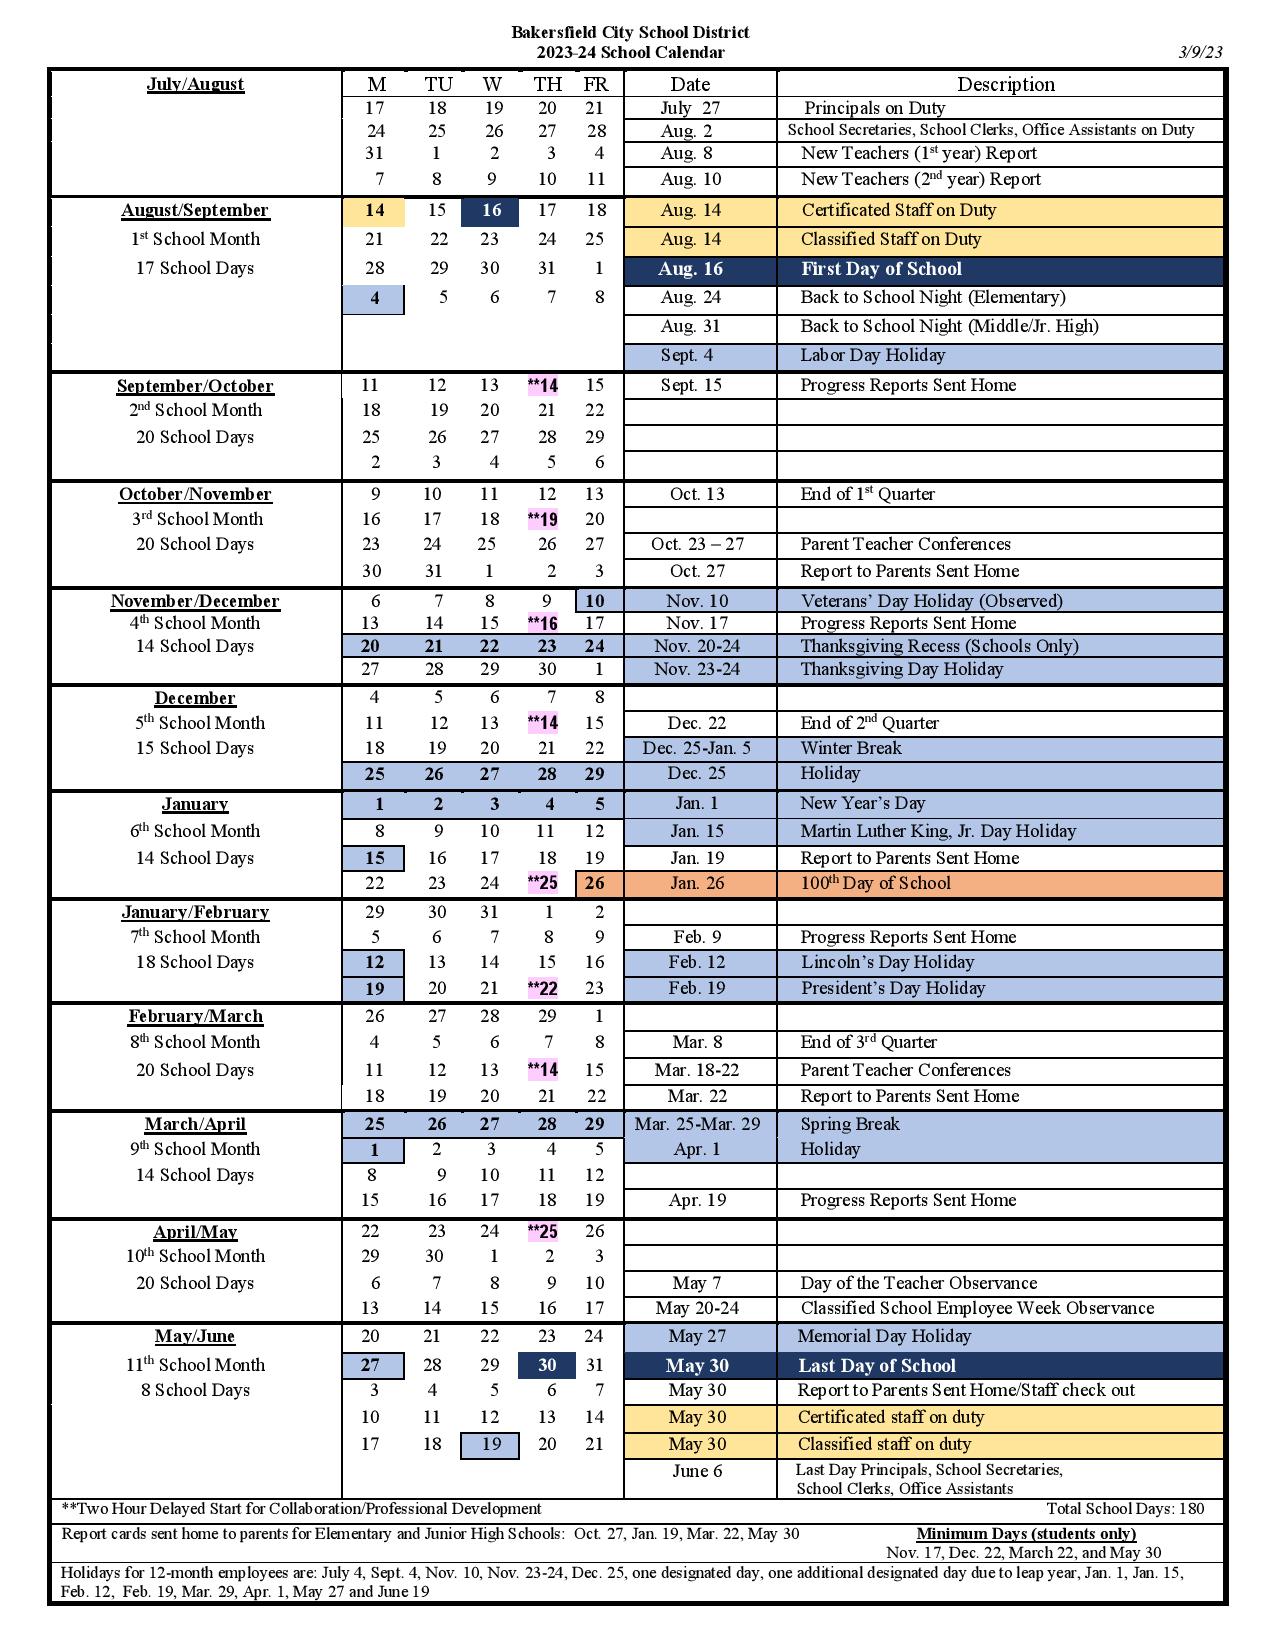 Bakersfield City School District Calendar 2024 in PDF